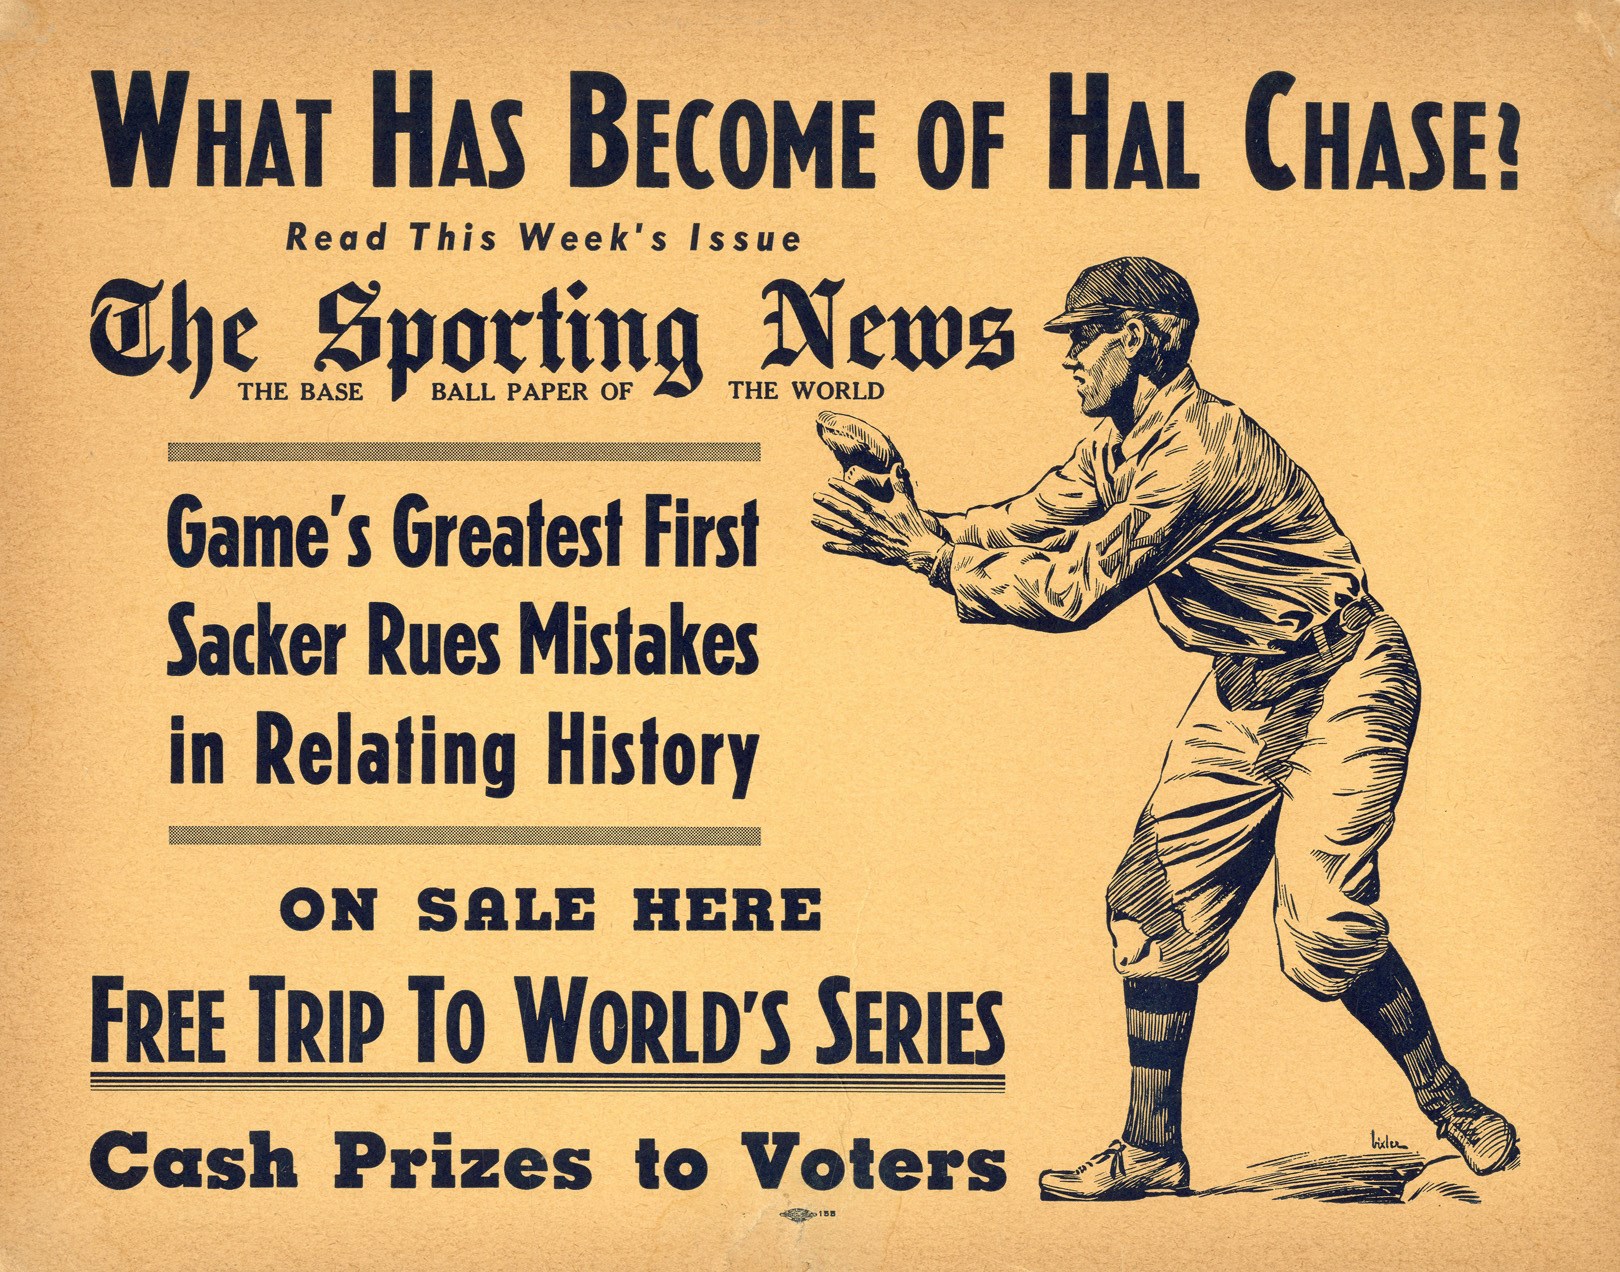 Baseball Memorabilia - 1941 Hal Chase Sporting News Advertising Poster